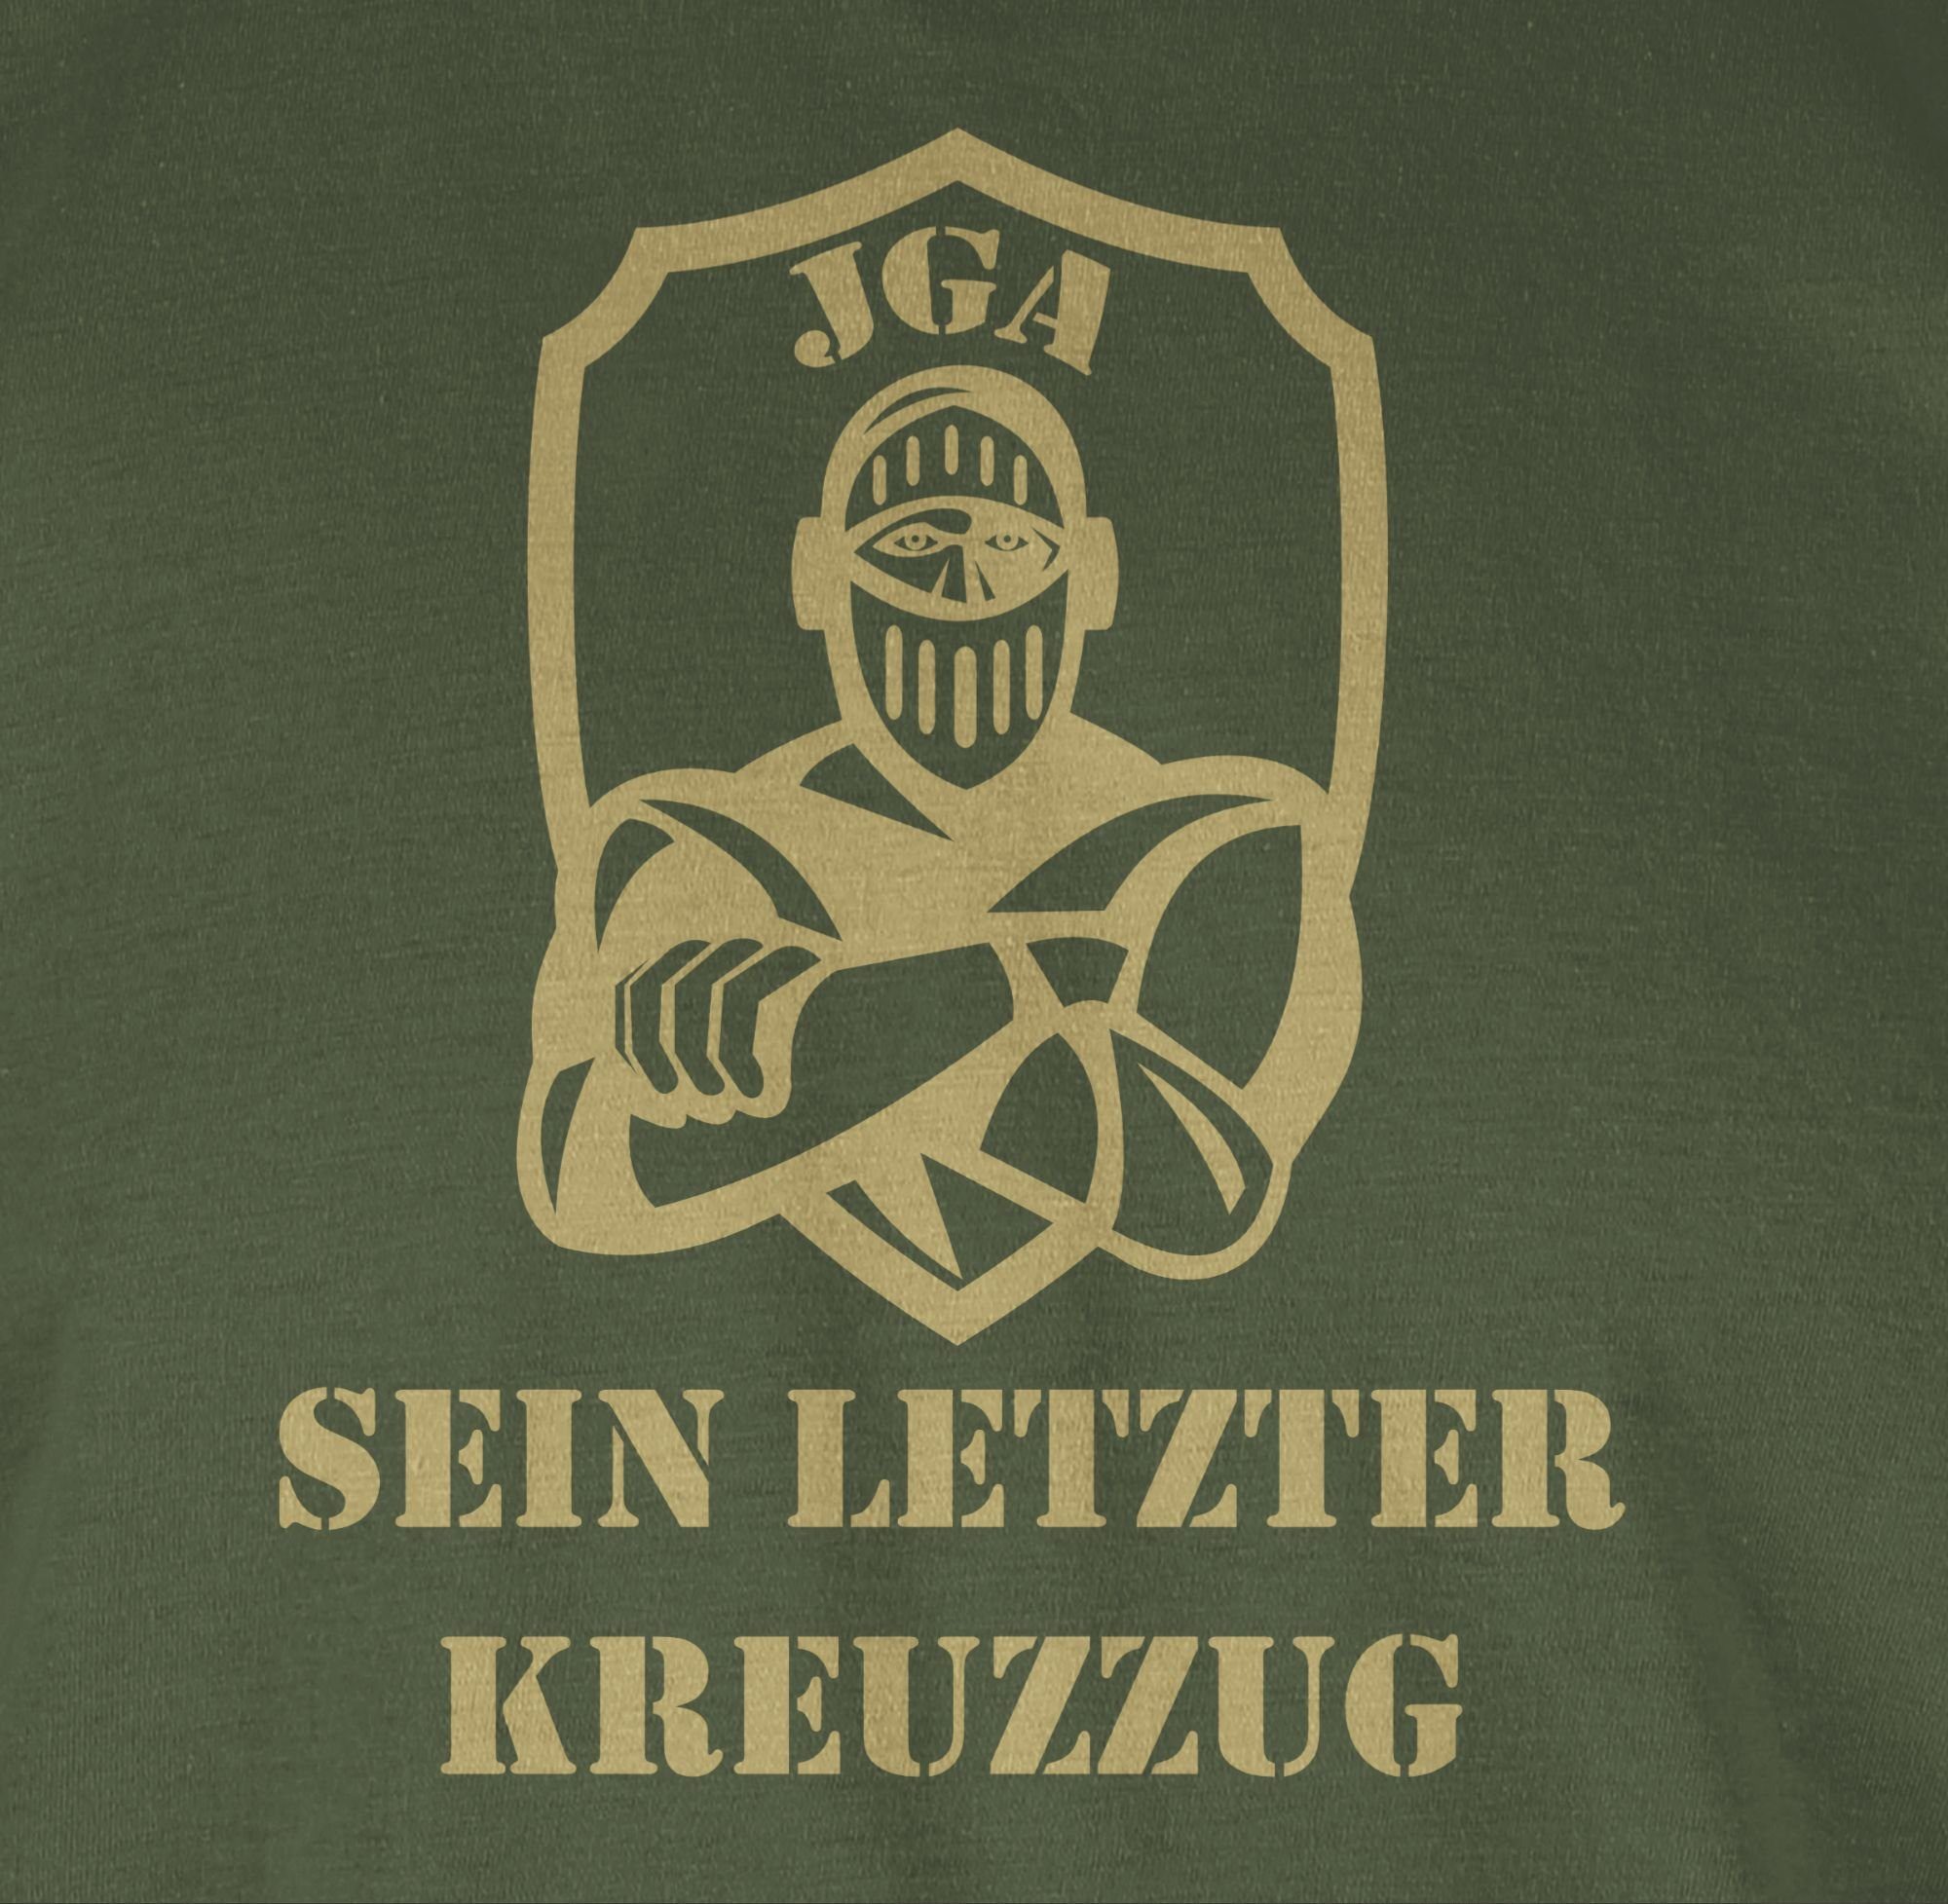 Shirtracer Grün Kreuzzug T-Shirt JGA Army Männer letzter 3 Sein